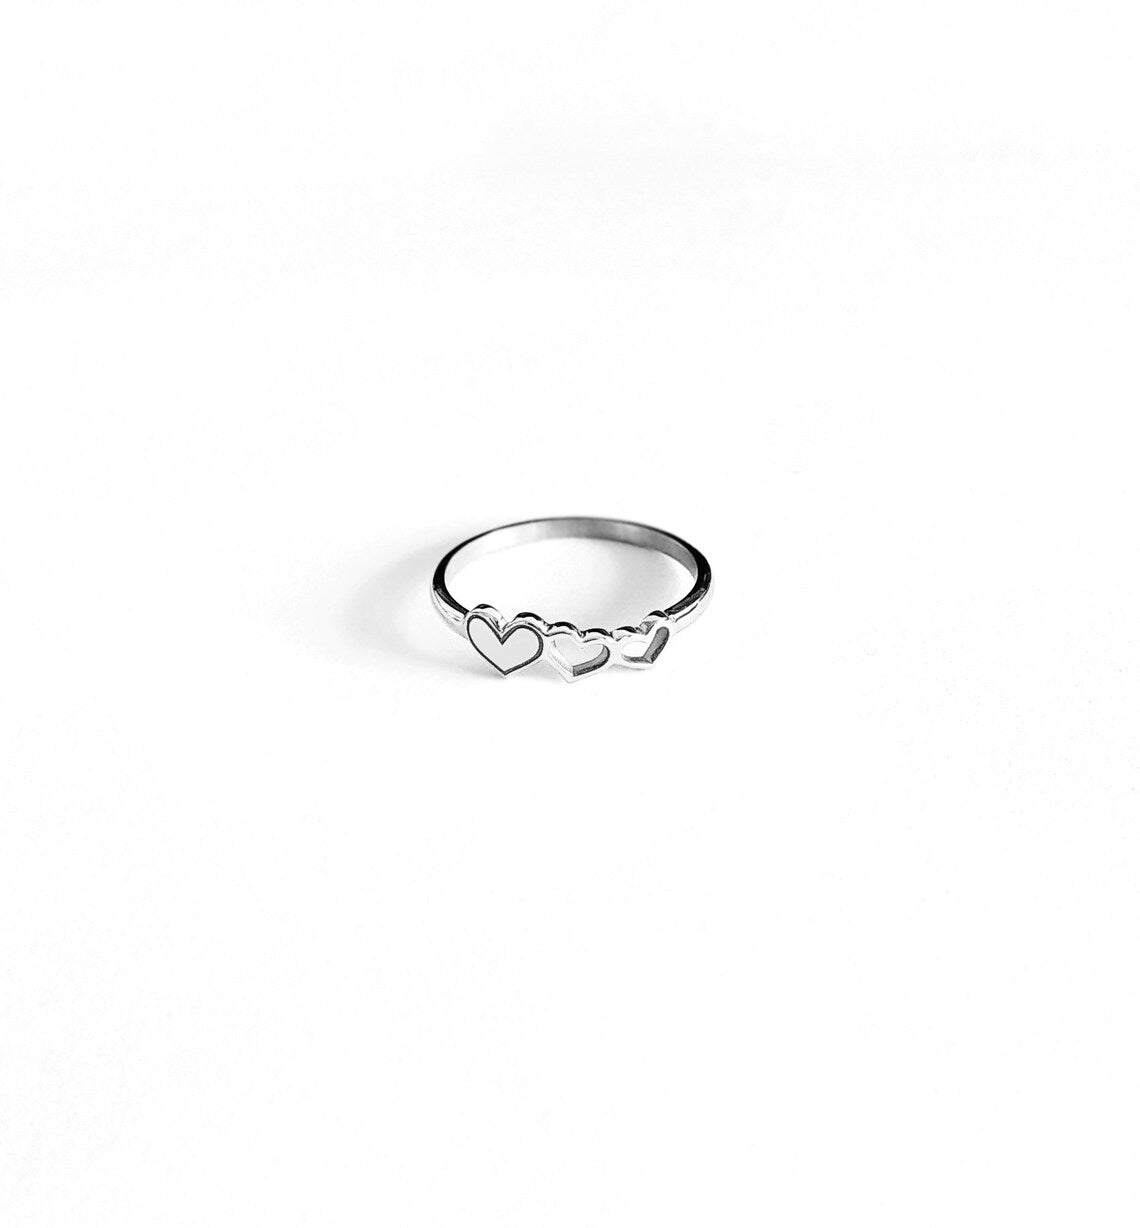 Peridot-Versprechensring – 14-karätiger Roségold-Vermeil-Ring – Peridot-Statement-Ring